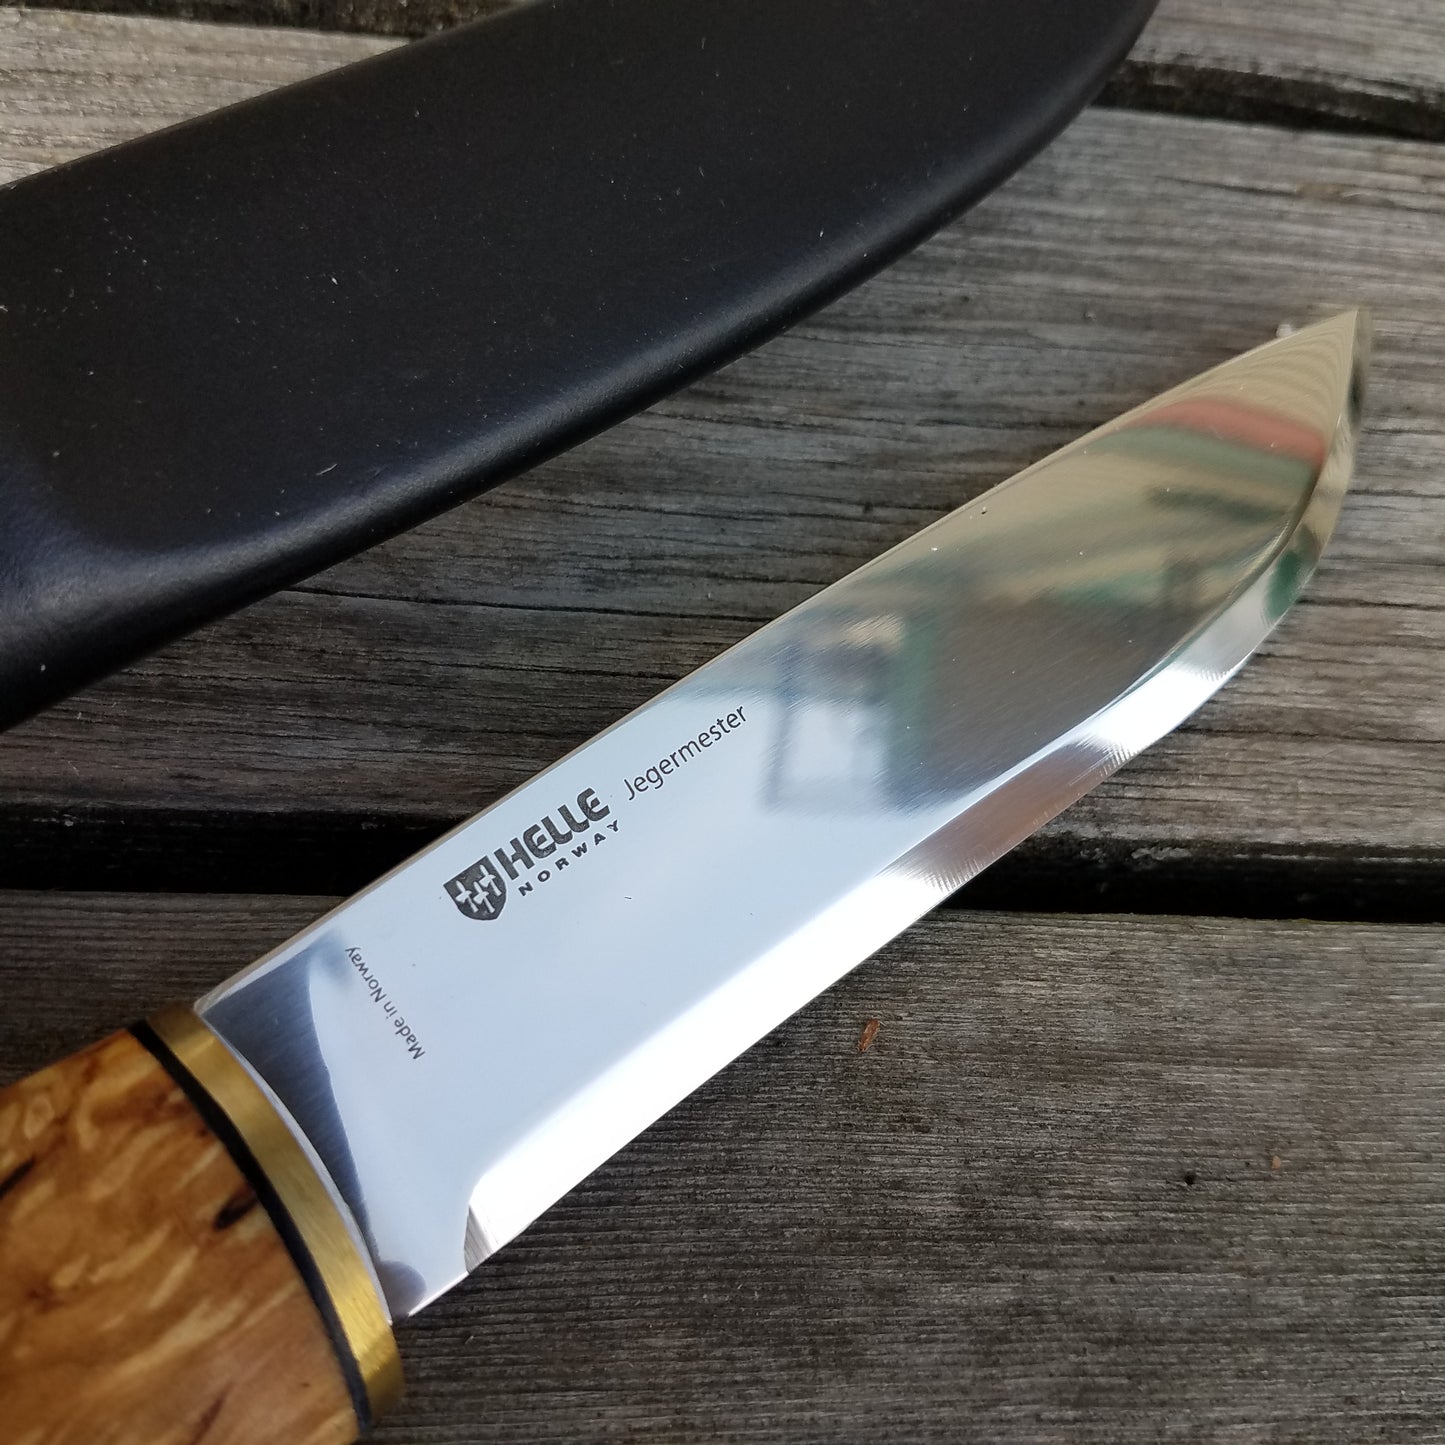 Helle Jegermester 5.25" Fixed Blade Knife